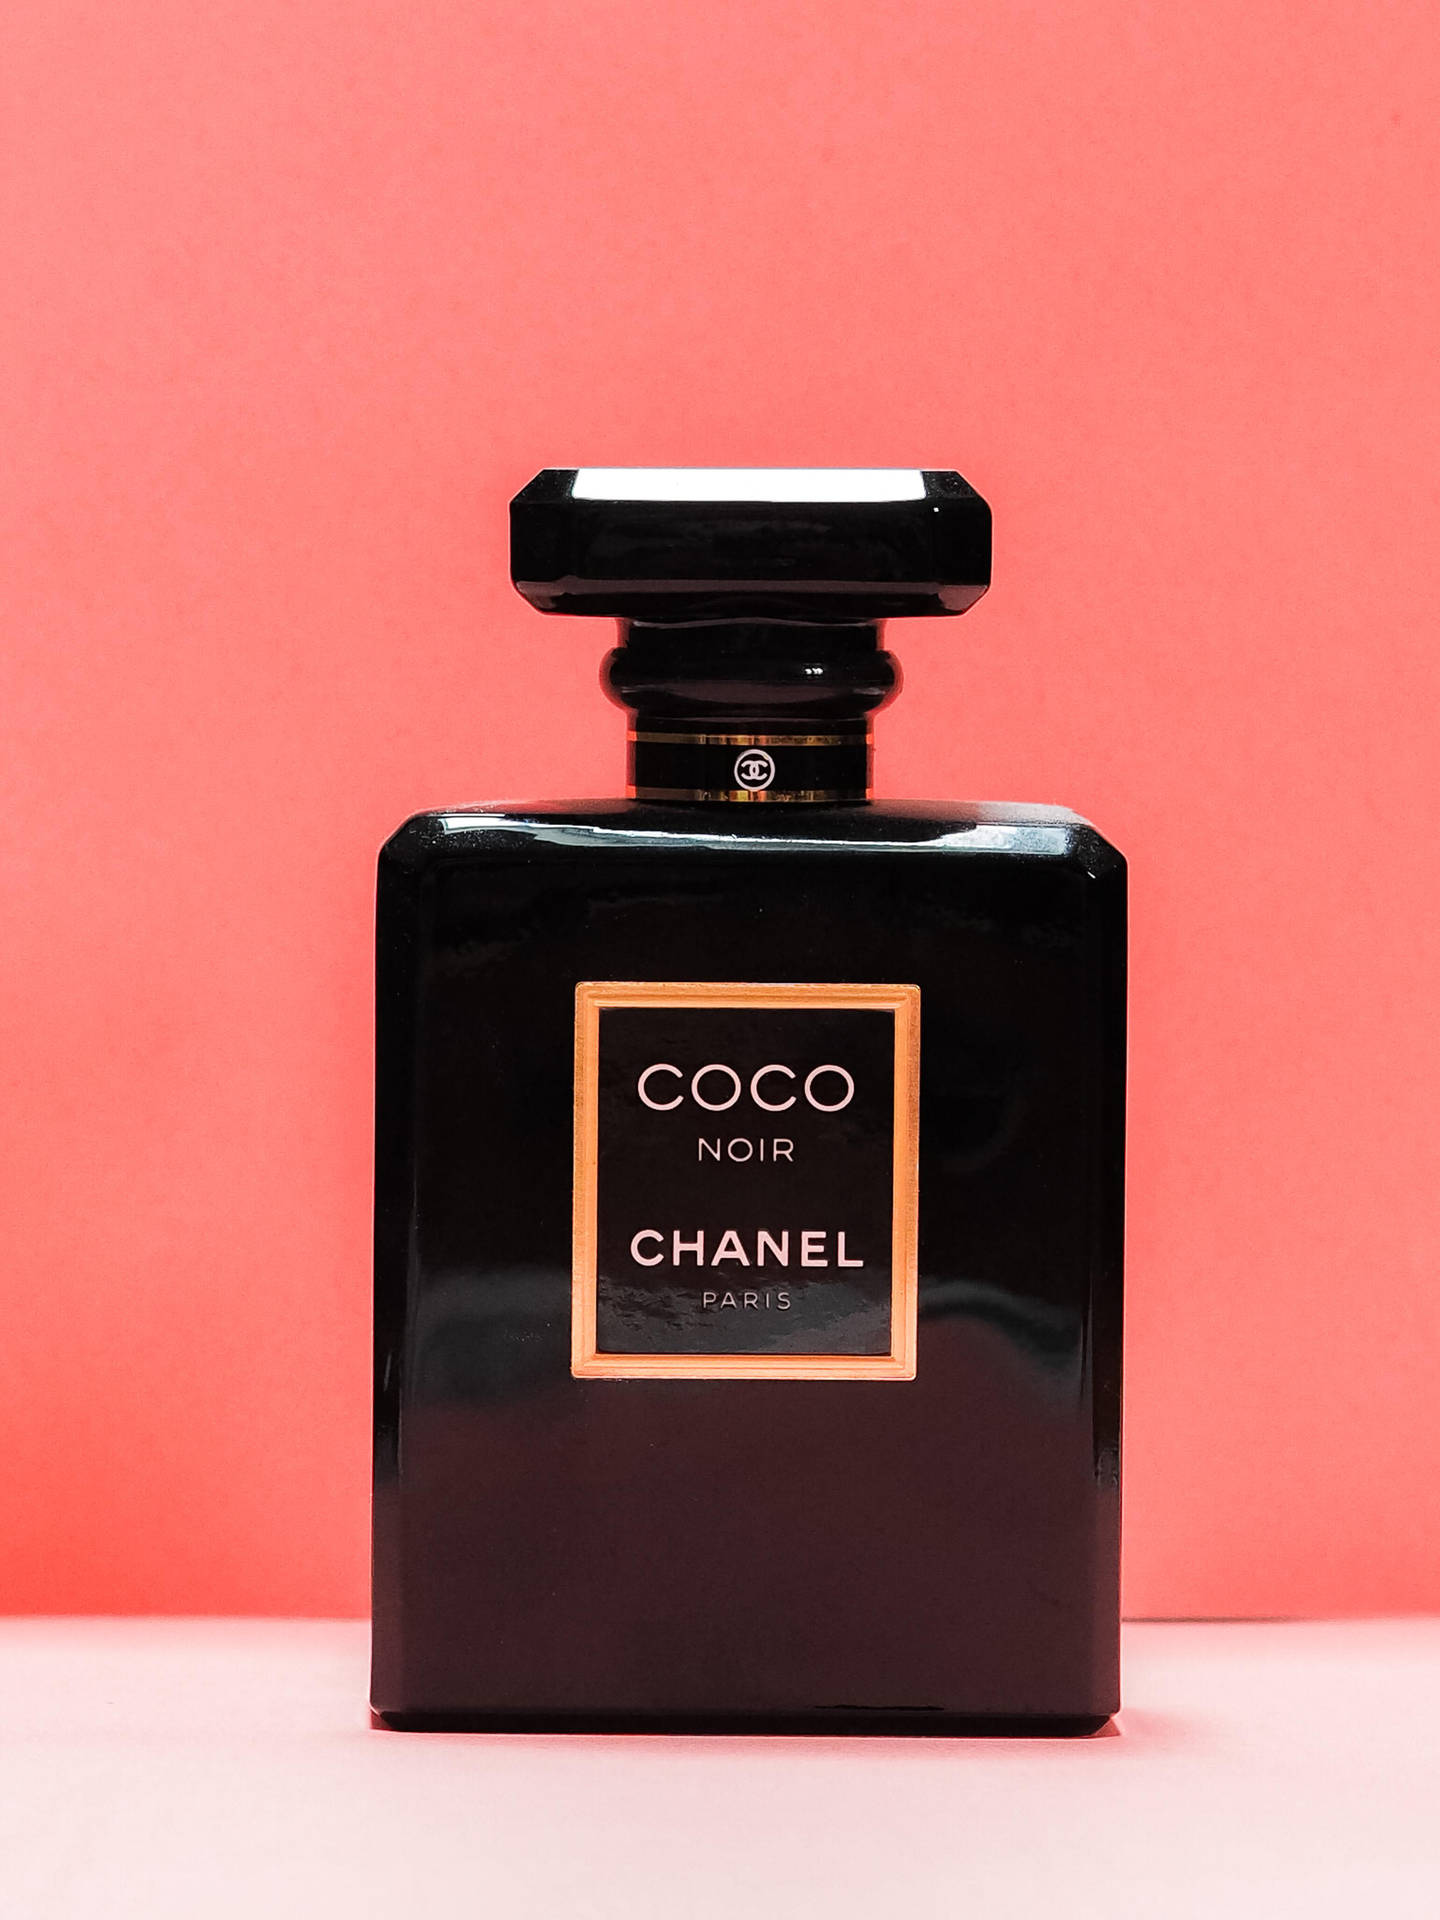 Download Coco Noir Chanel Pink Aesthetic Wallpaper